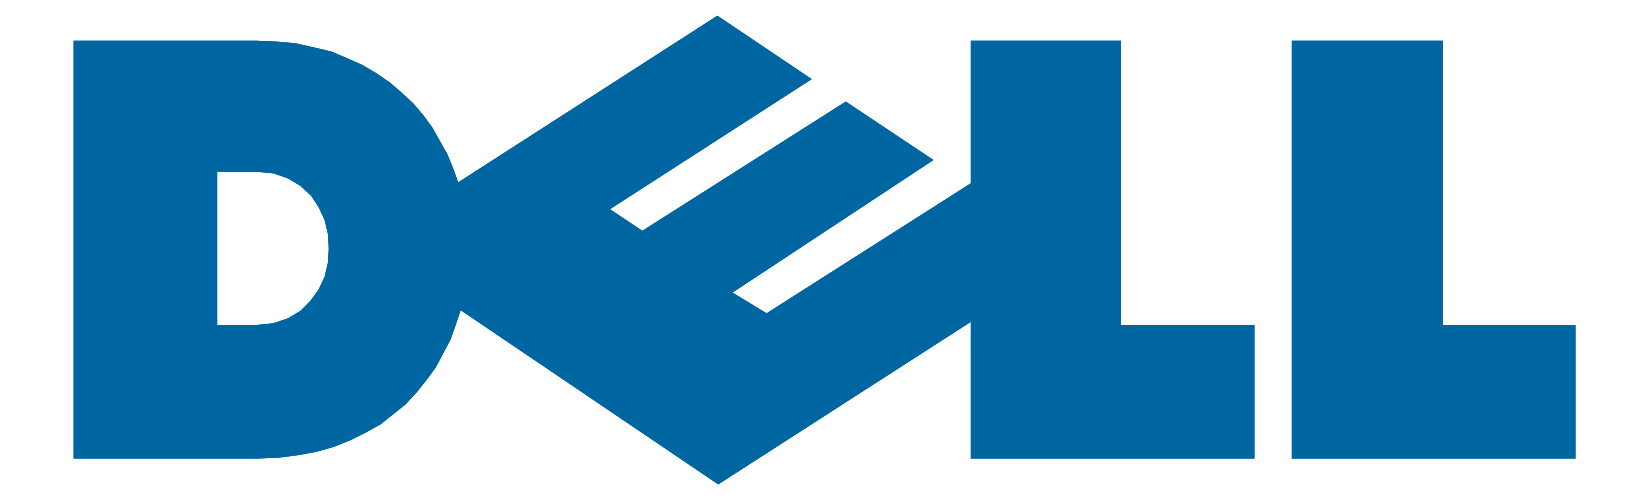 Dell Logo Image